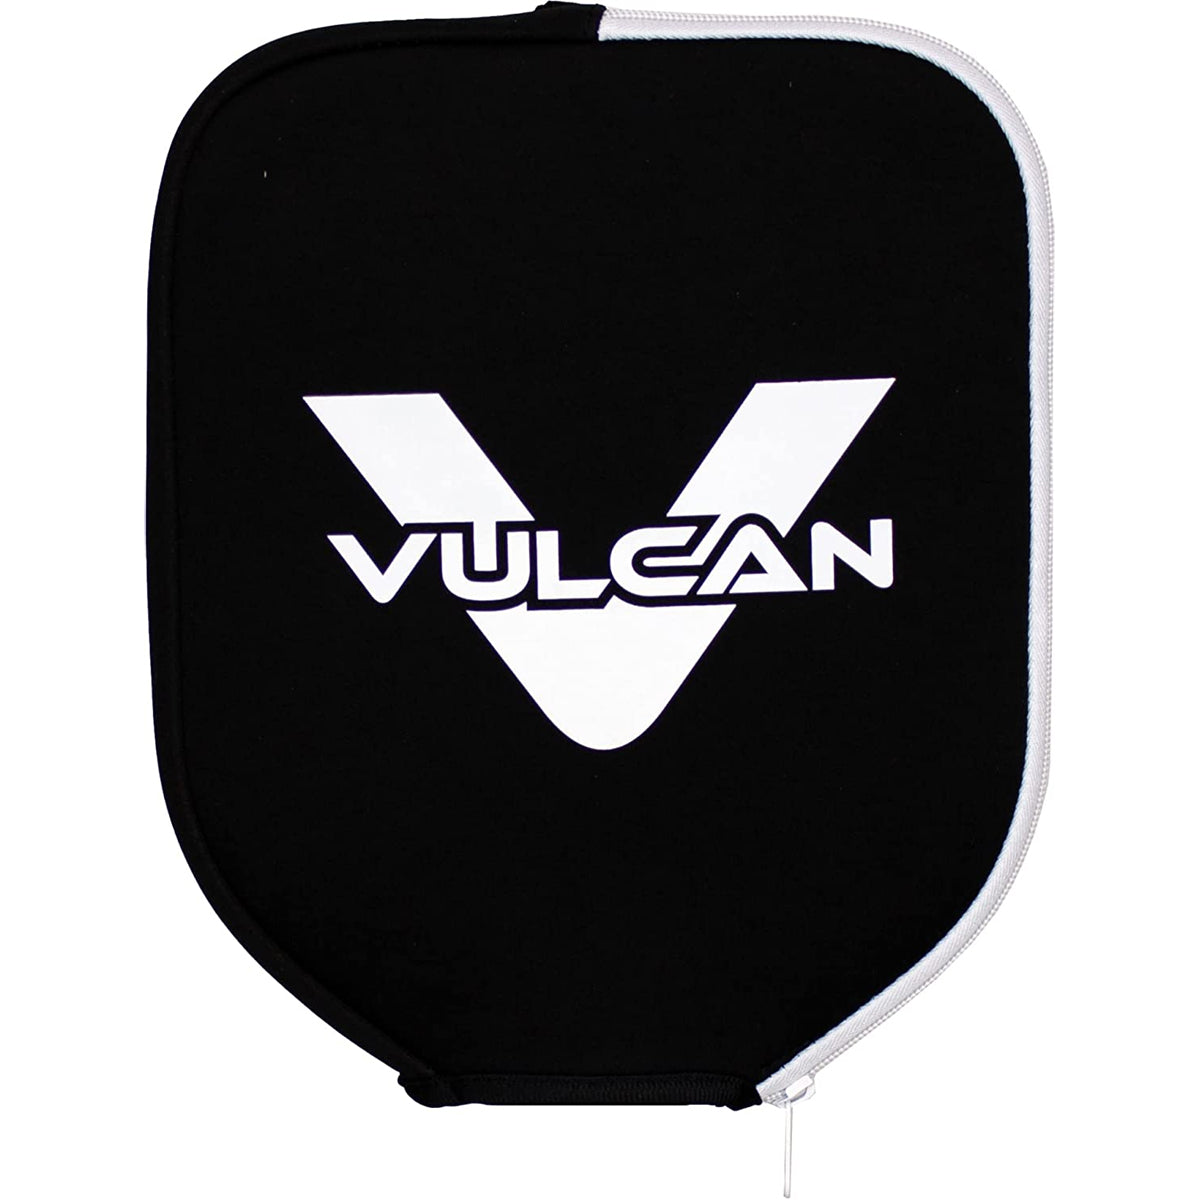 Vulcan Pickleball Paddle Cover - Black Vulcan